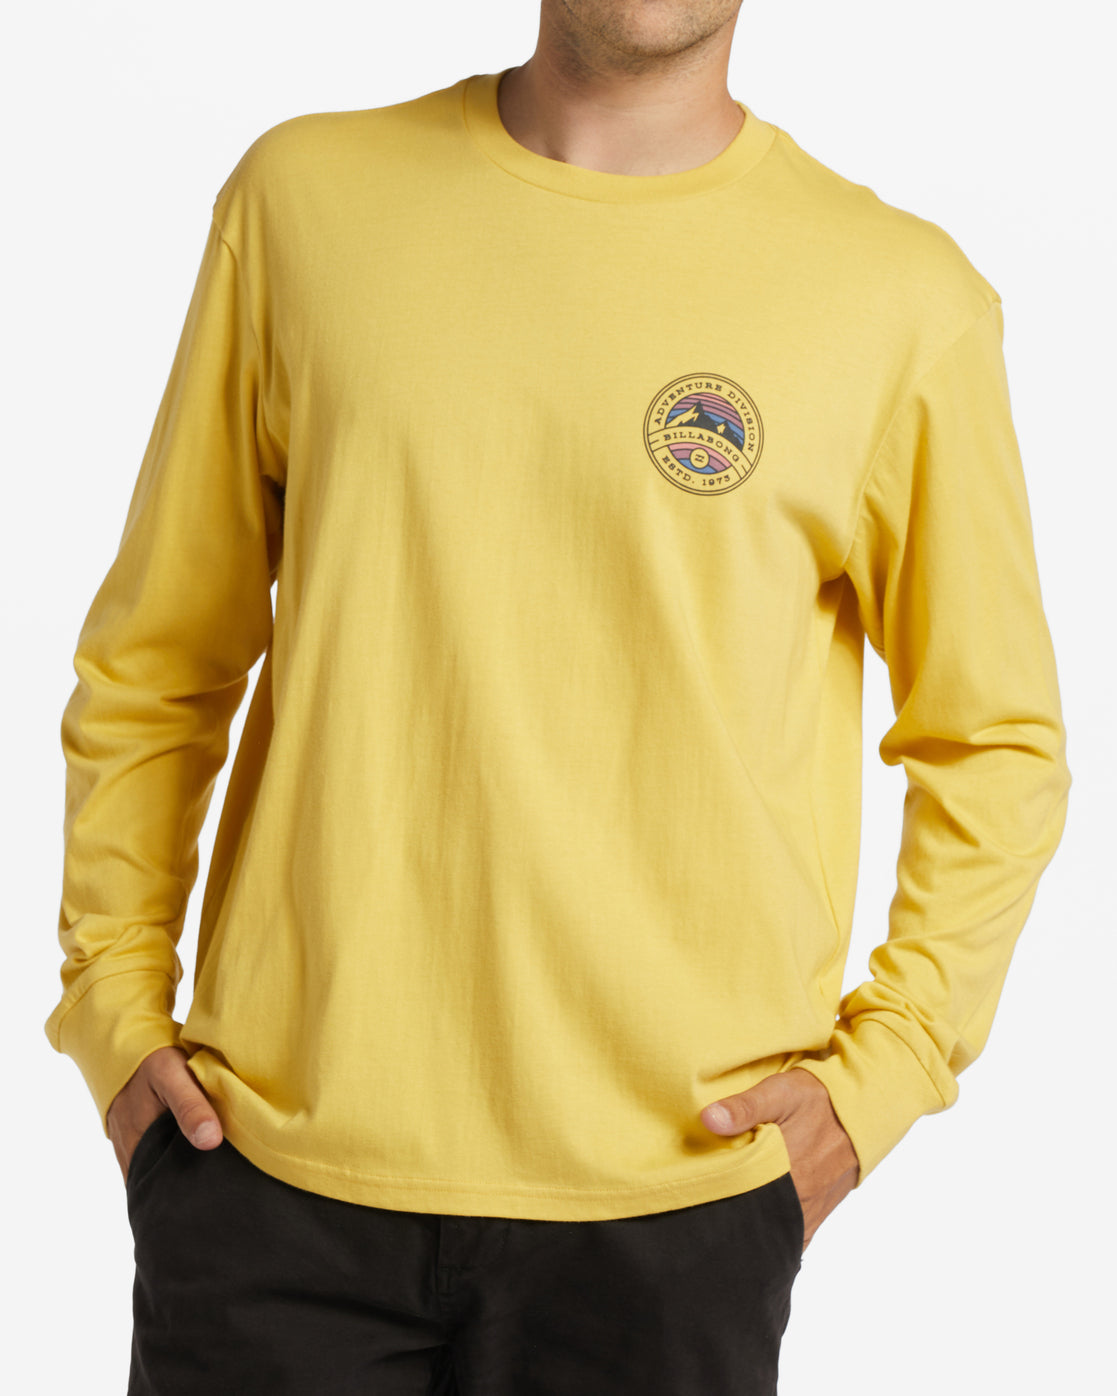 Rockies Long Sleeve T-Shirt - Sunny